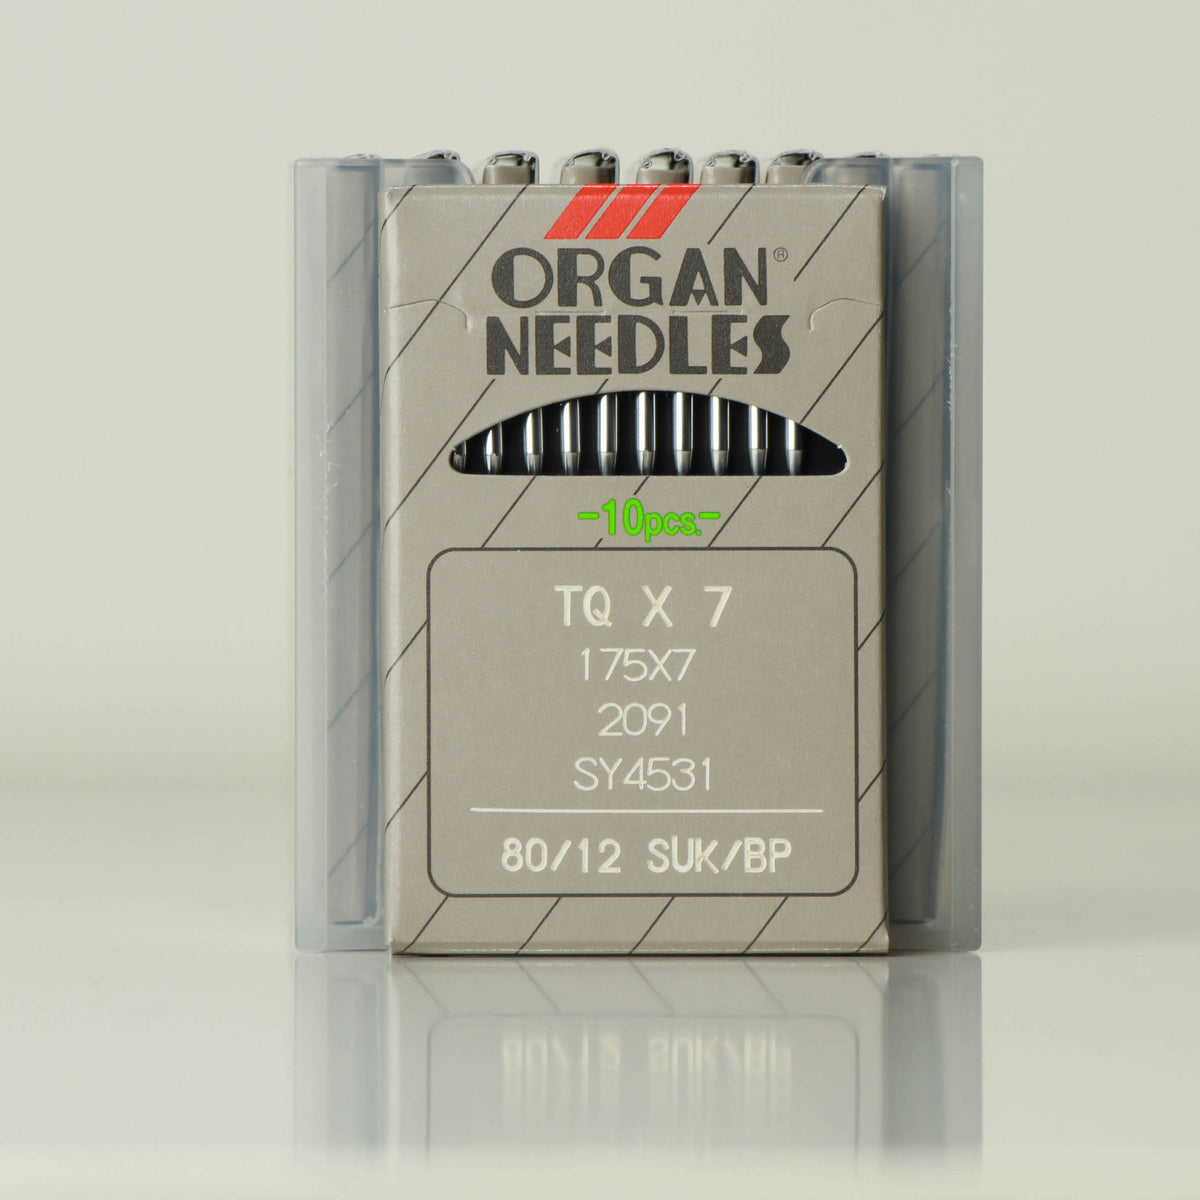 Organ Needles 175x7 (Box of 100 Needles )